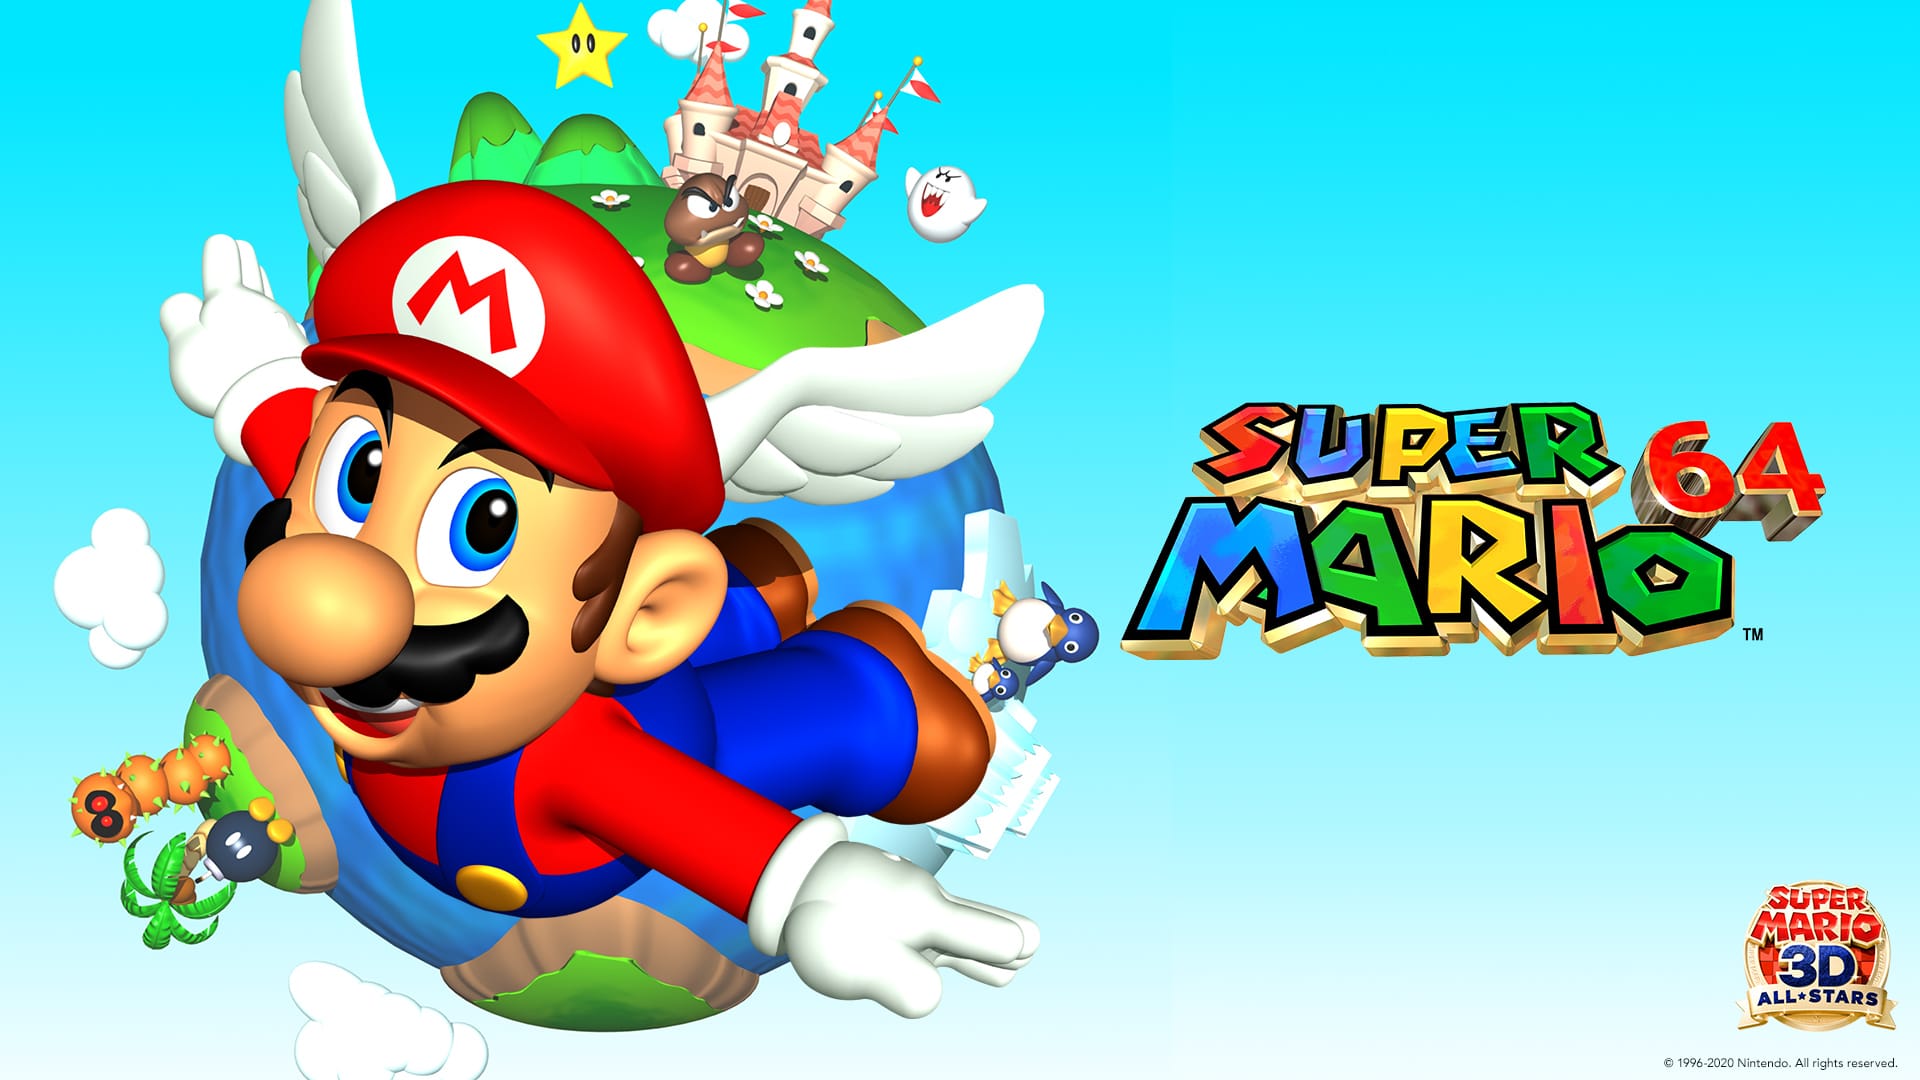 Modder Spends Weeks To Fix Entire Super Mario 64 Source Code